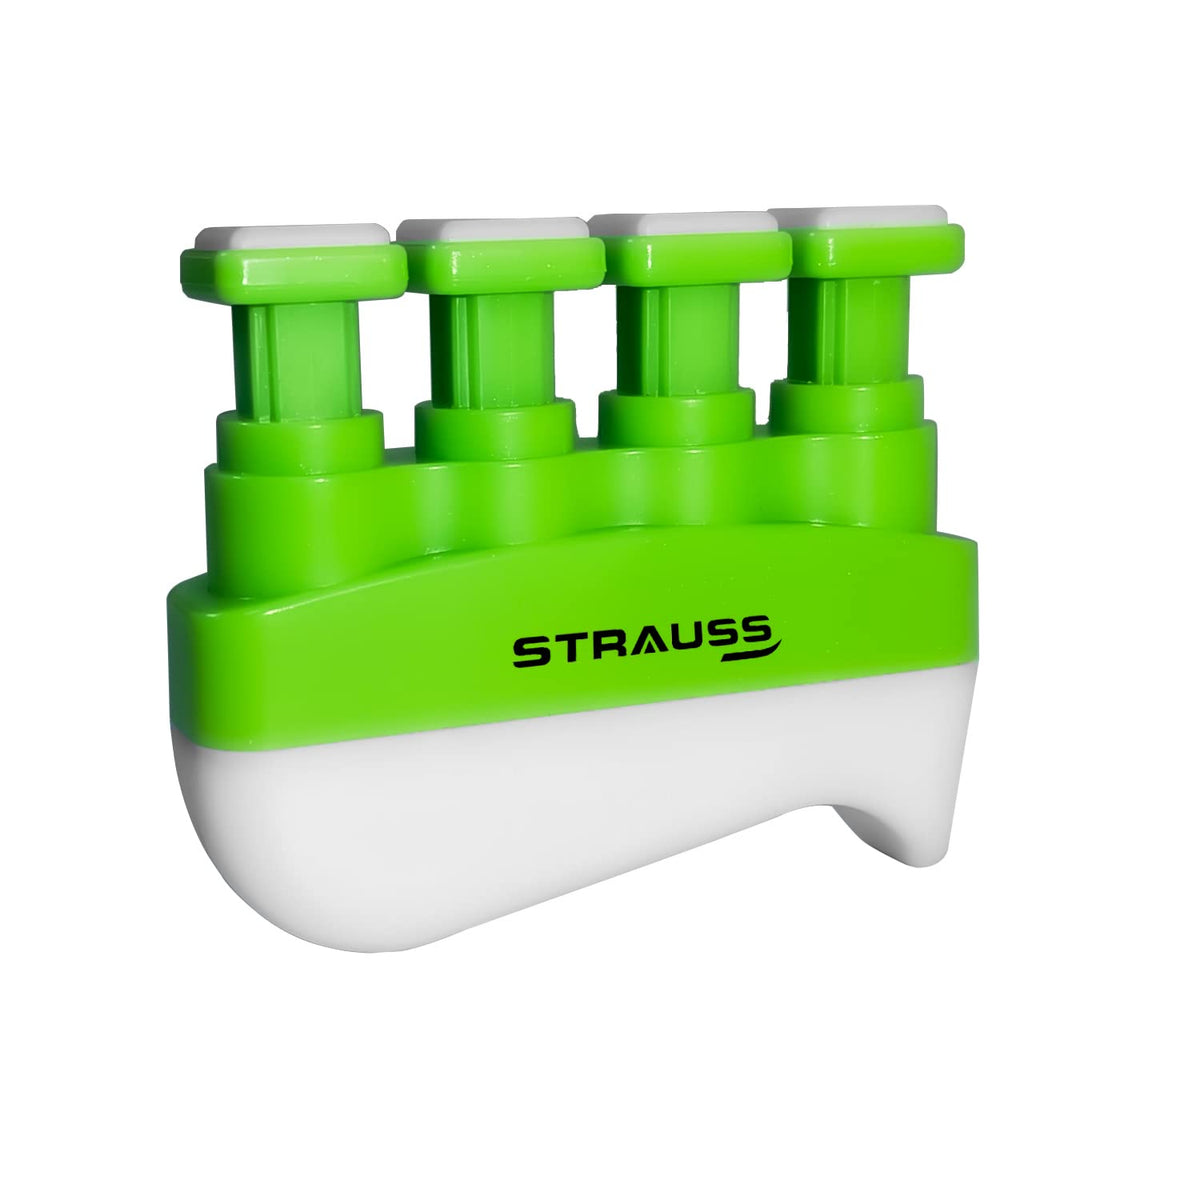 Strauss Adjustable Square Finger Hand Grip, (Green)